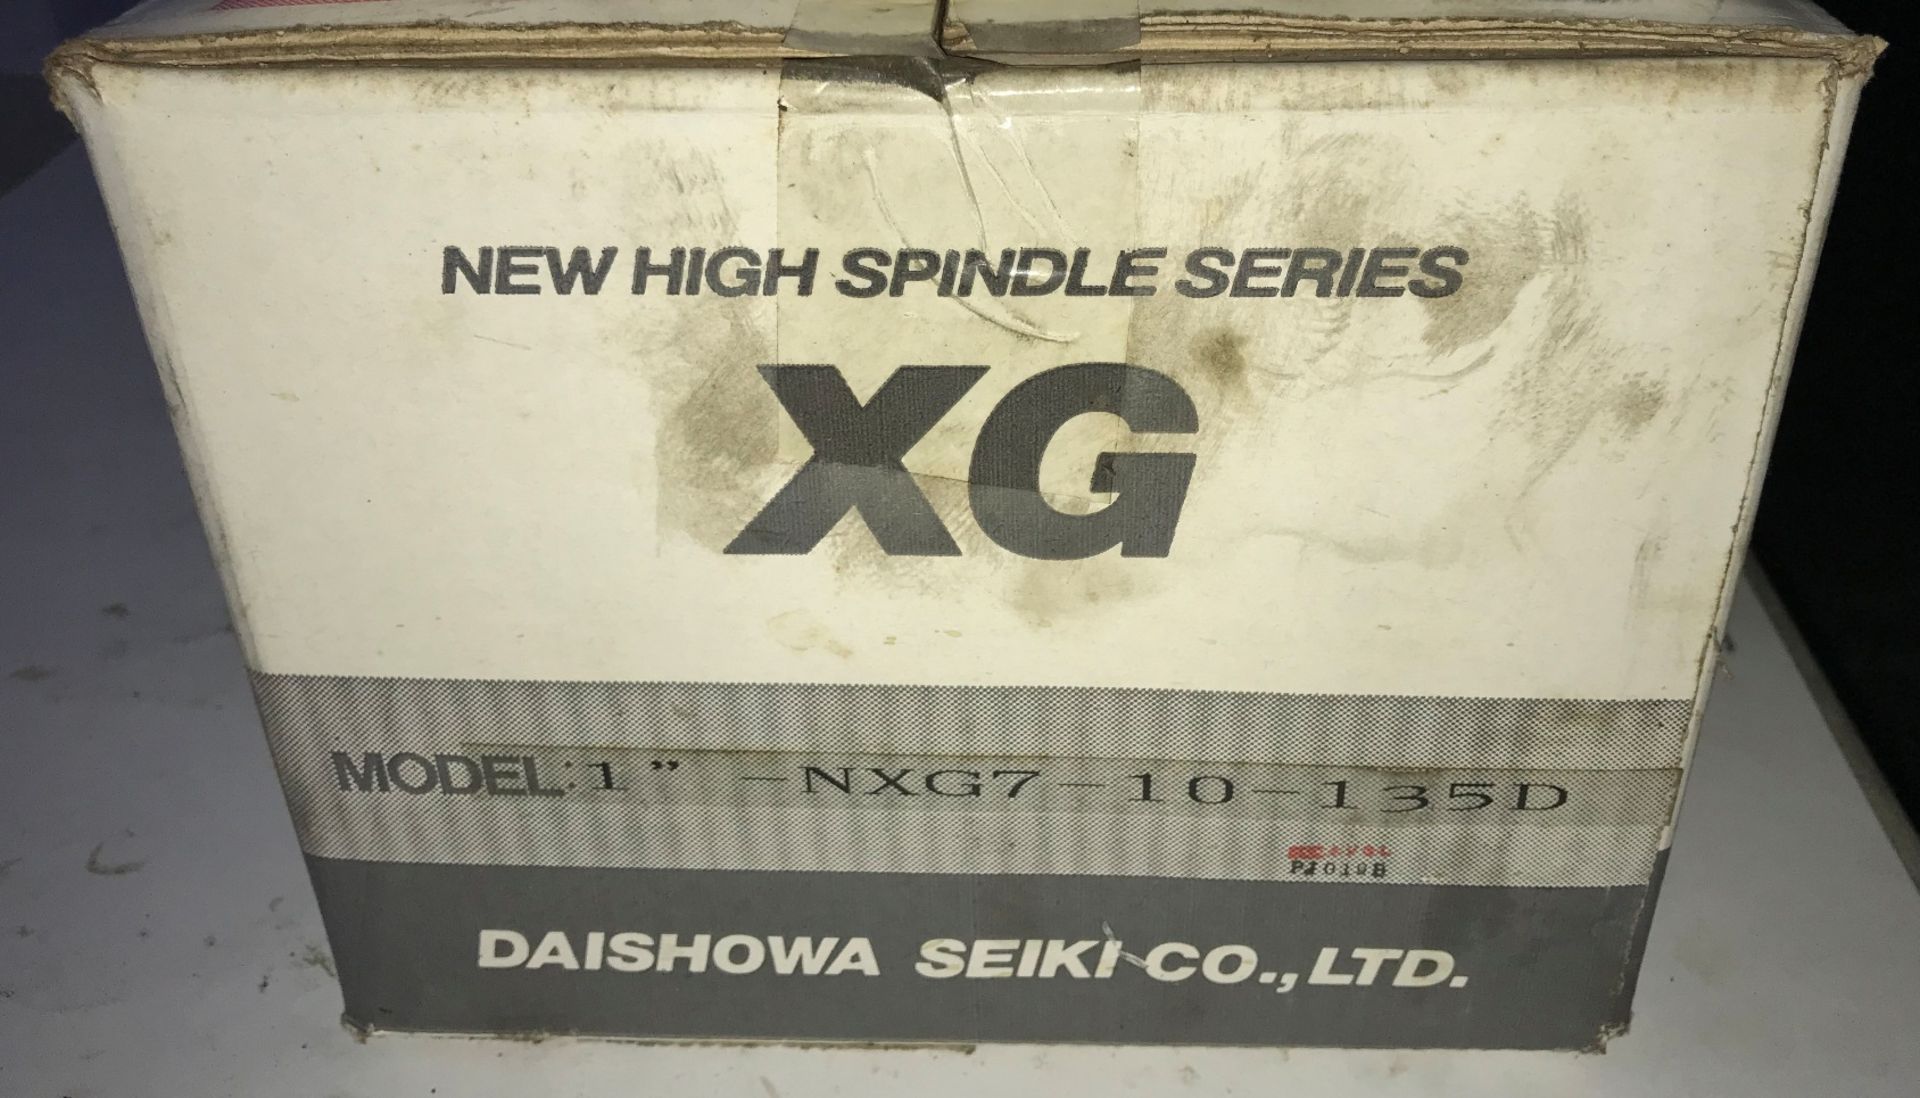 Daishowa Seiki Big Mod. 1" NXG7-10-135D High Speed Multiplier - Image 2 of 2